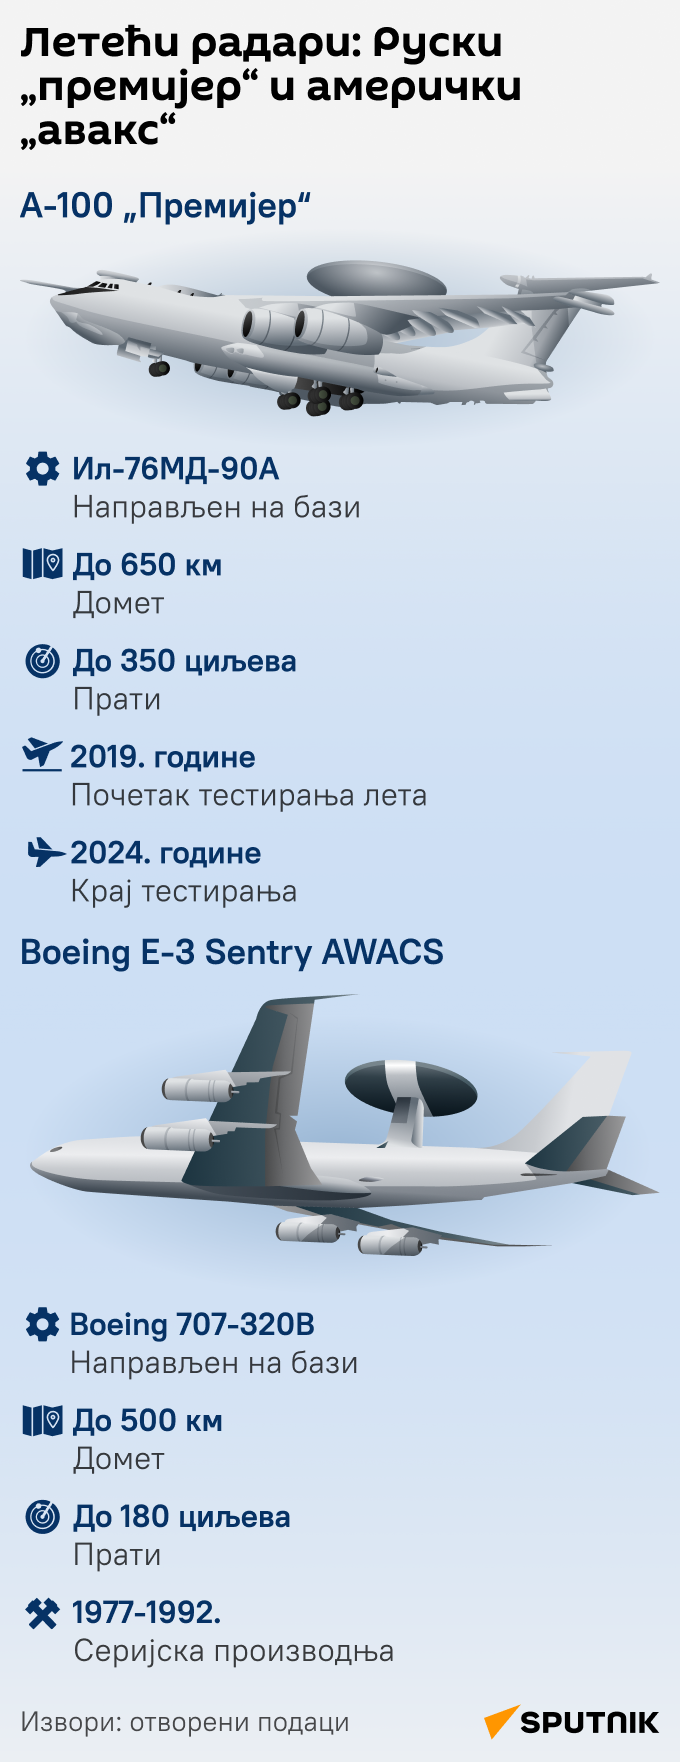 Инфографика Летећи радари: Руски „премијер“ и амерички „авакс“ ЋИР моб - Sputnik Србија